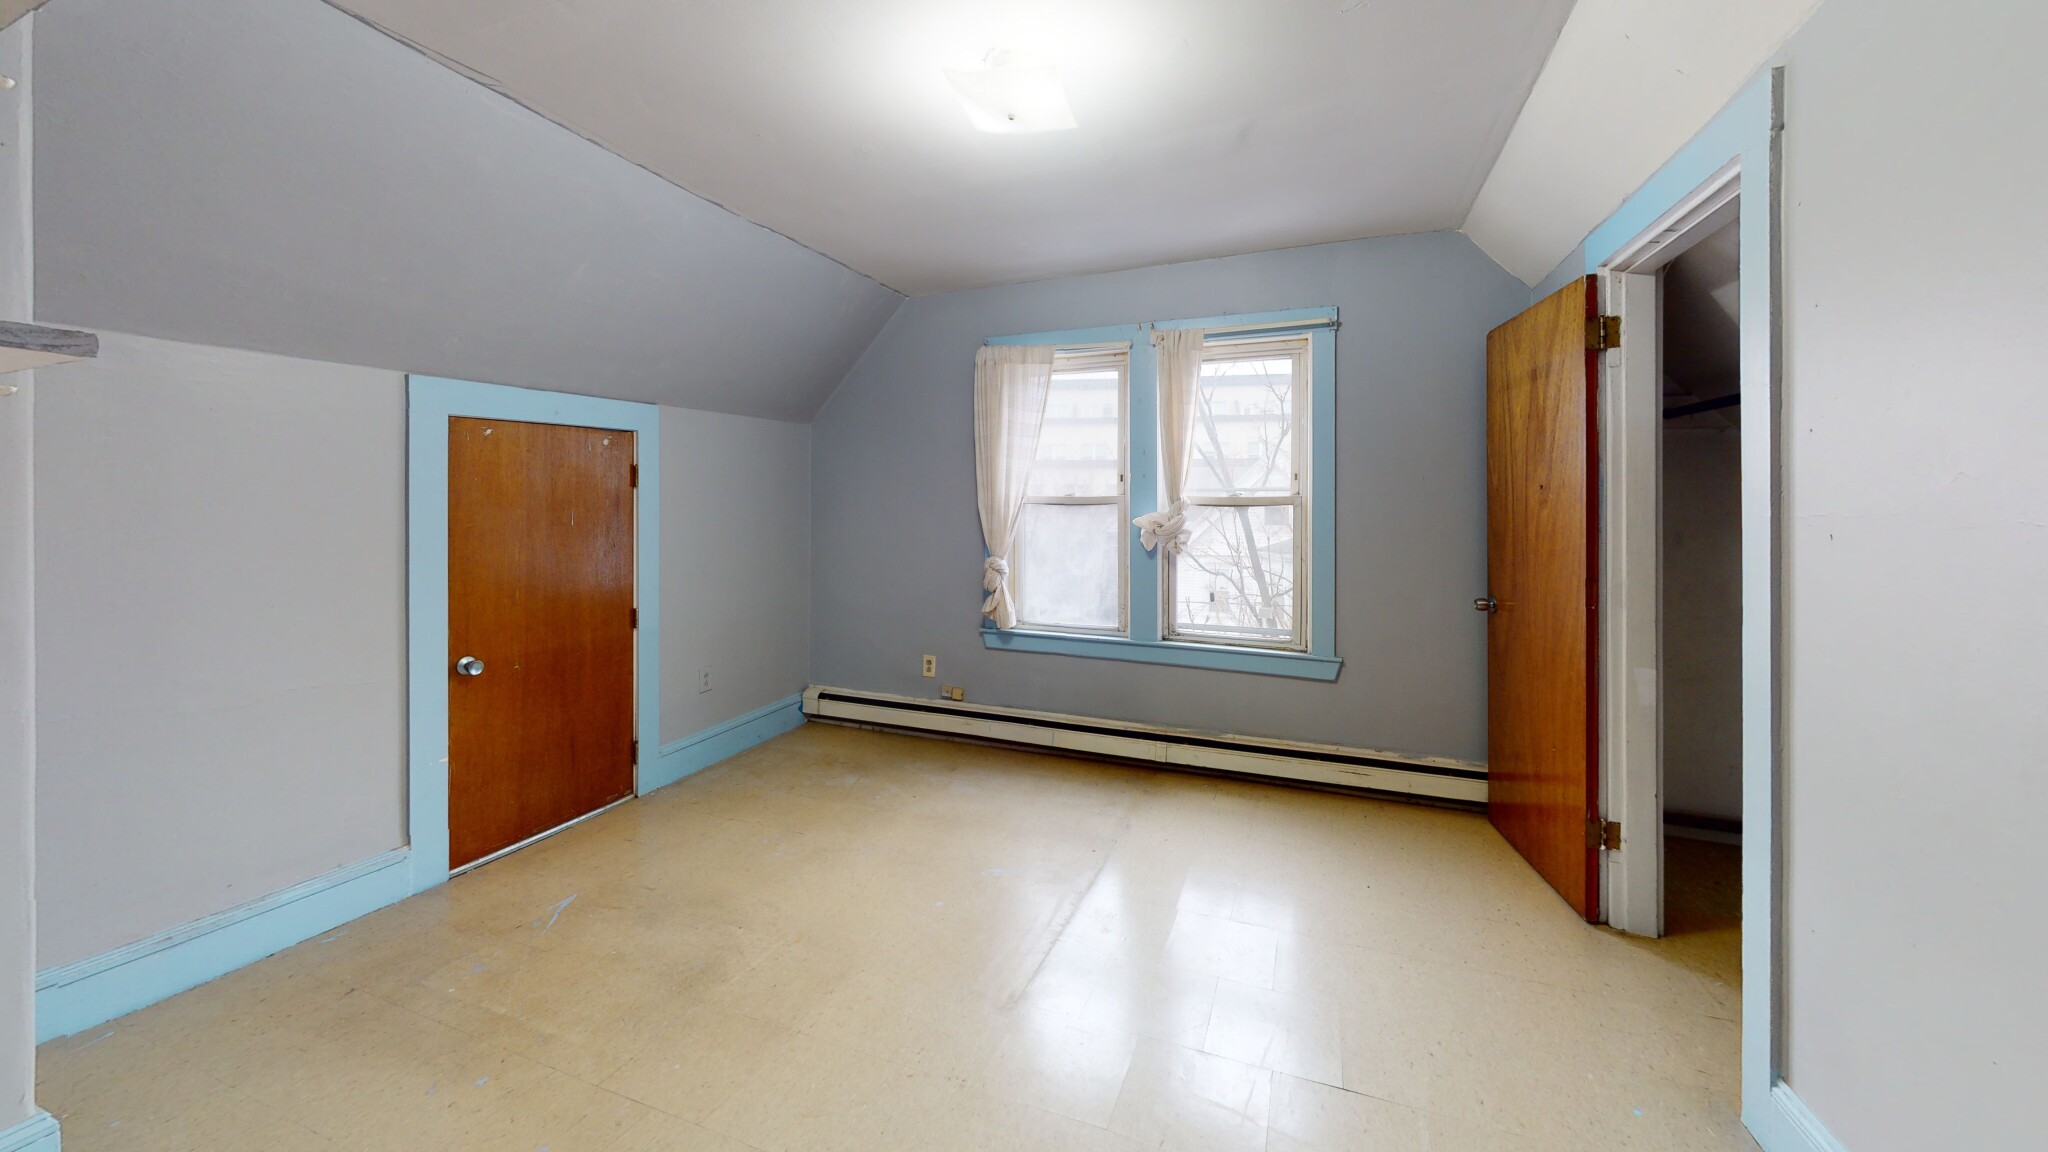 Photos of apartment on Burnett St.,Boston MA 02130